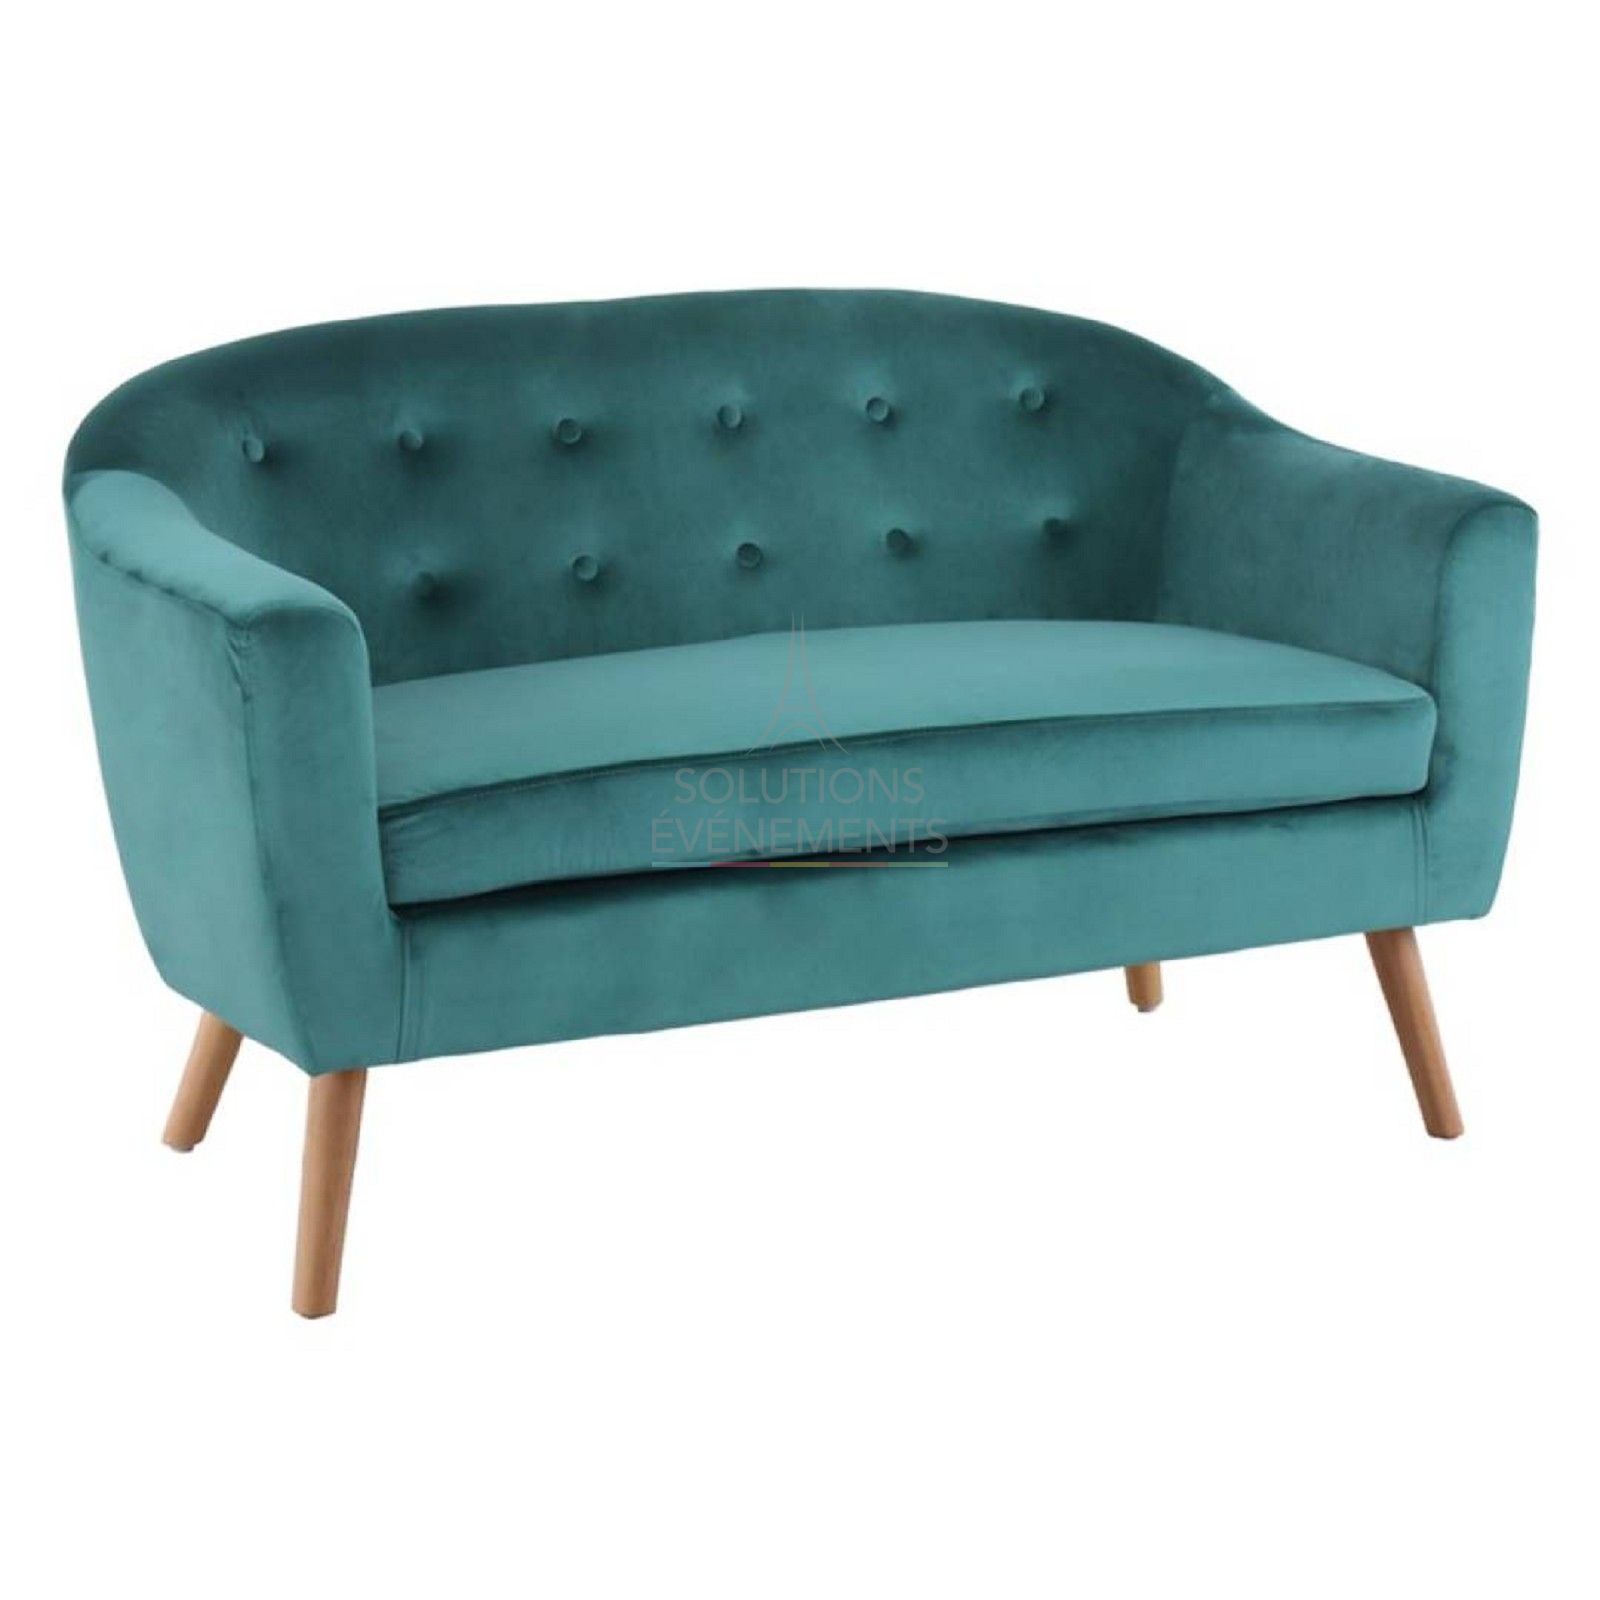 Scandinavian style designer sofa rental for 2 to 3 people